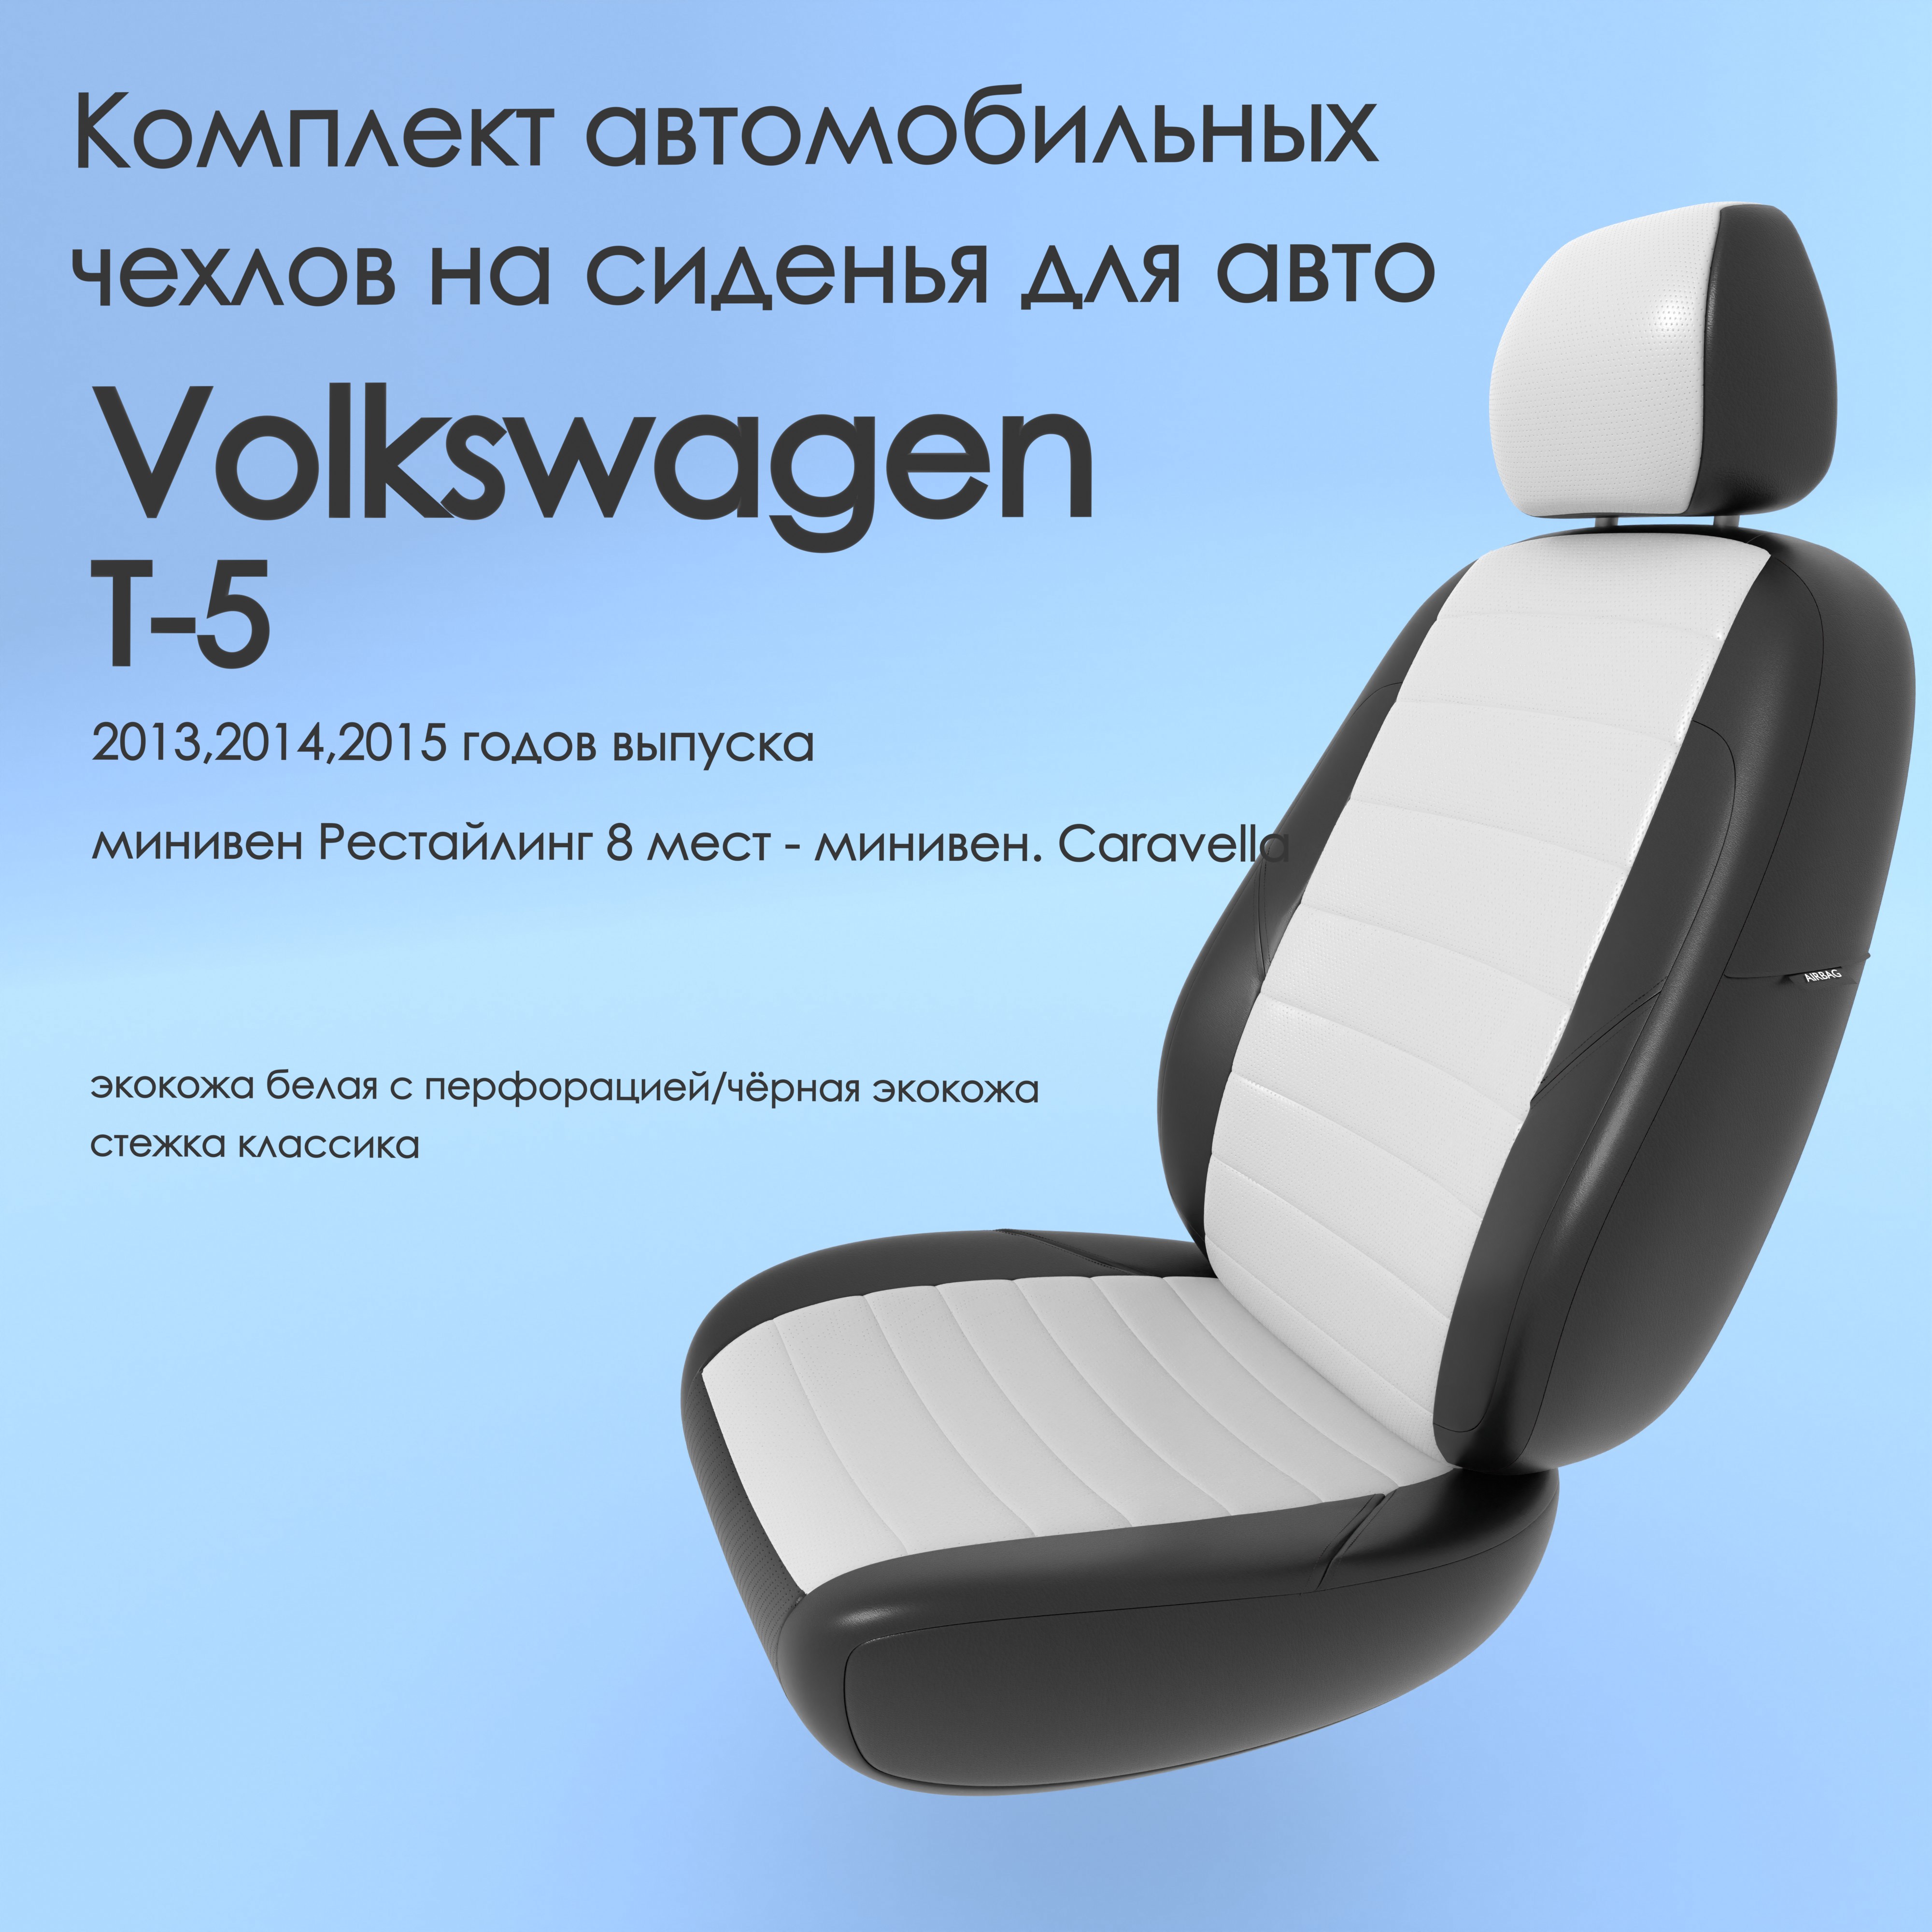 фото Чехлы чехломания volkswagen t-5 2013-2015 минивен рестйл 8 м -caravella 8 бел/чер-эк/k2